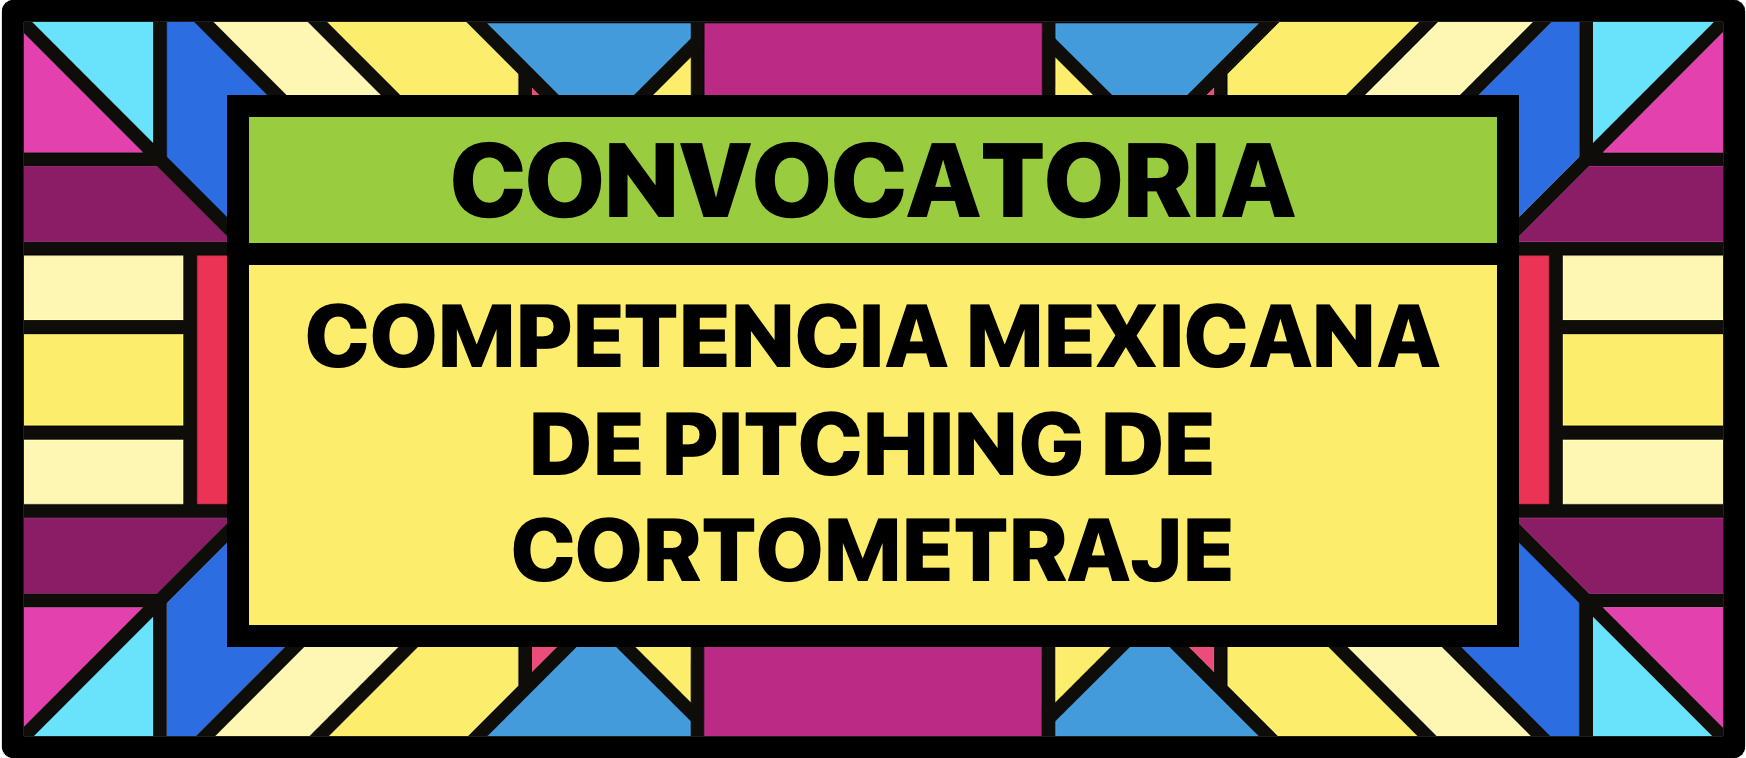 SHORTS MÉXICO Festival Internacional de Cortometrajes de México Convocatoria de la Competencia de Pitching de Cortometraje 2021